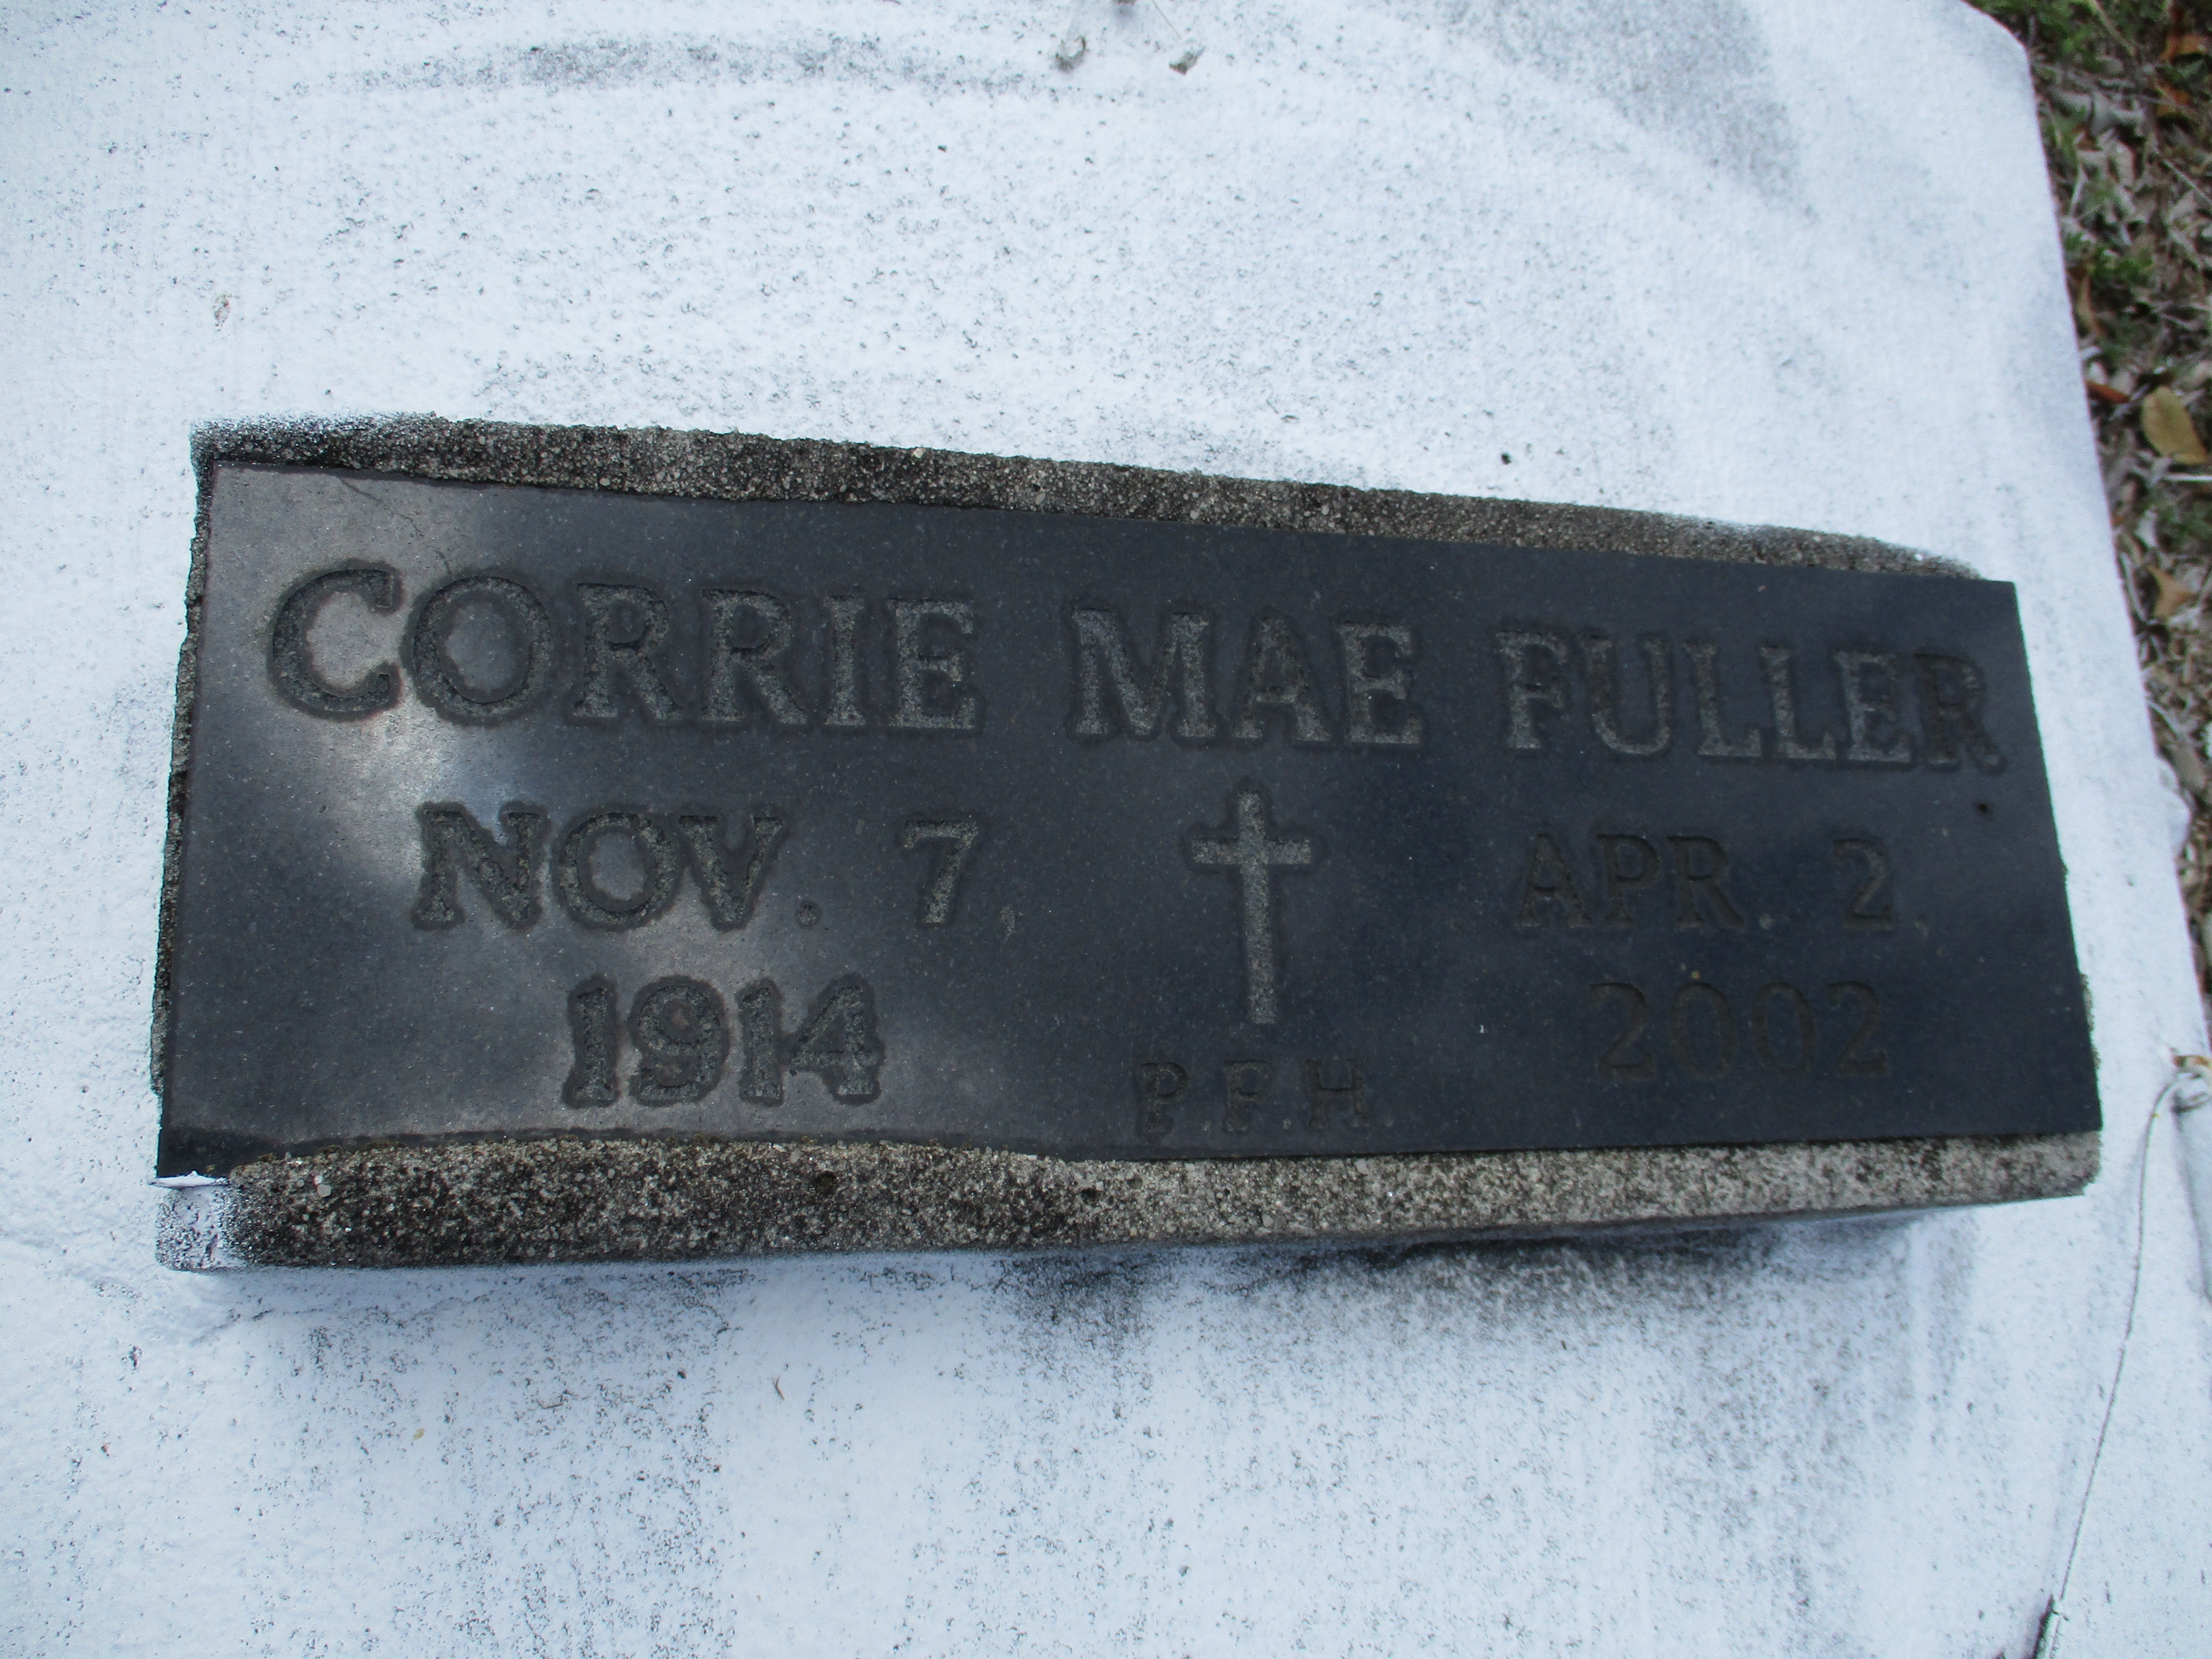 Corrie Mae Fuller